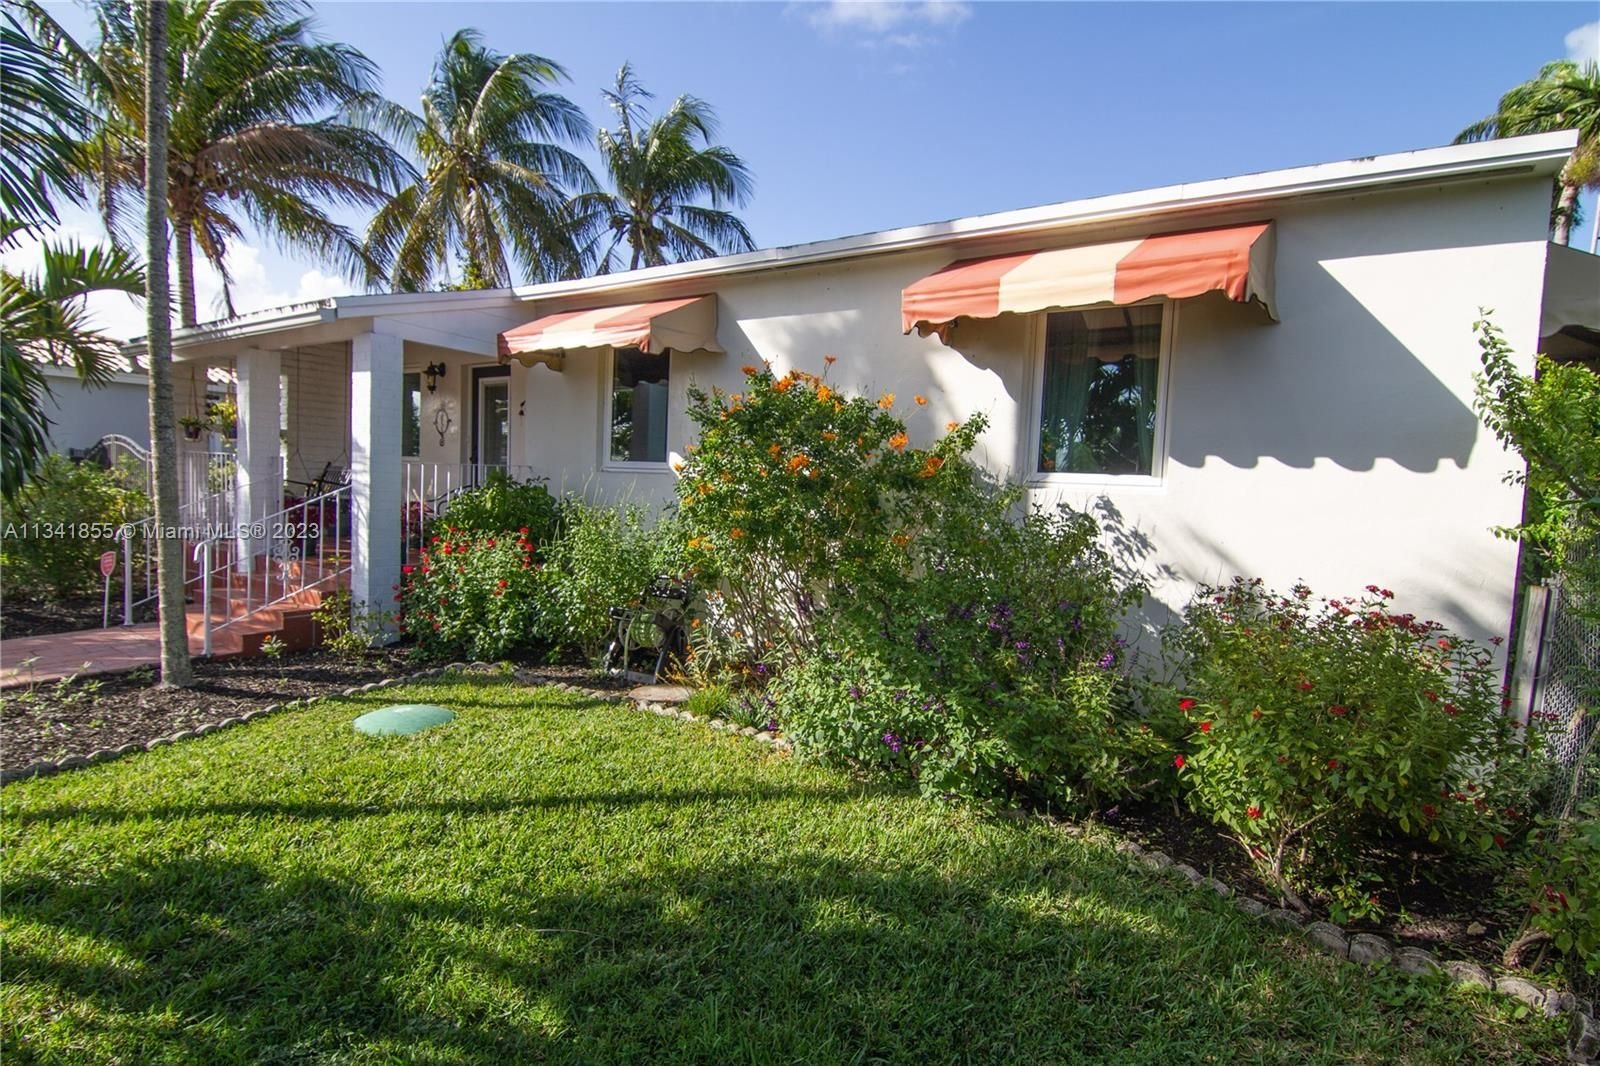 Real estate property located at 7855 28th St, Miami-Dade County, Miami, FL